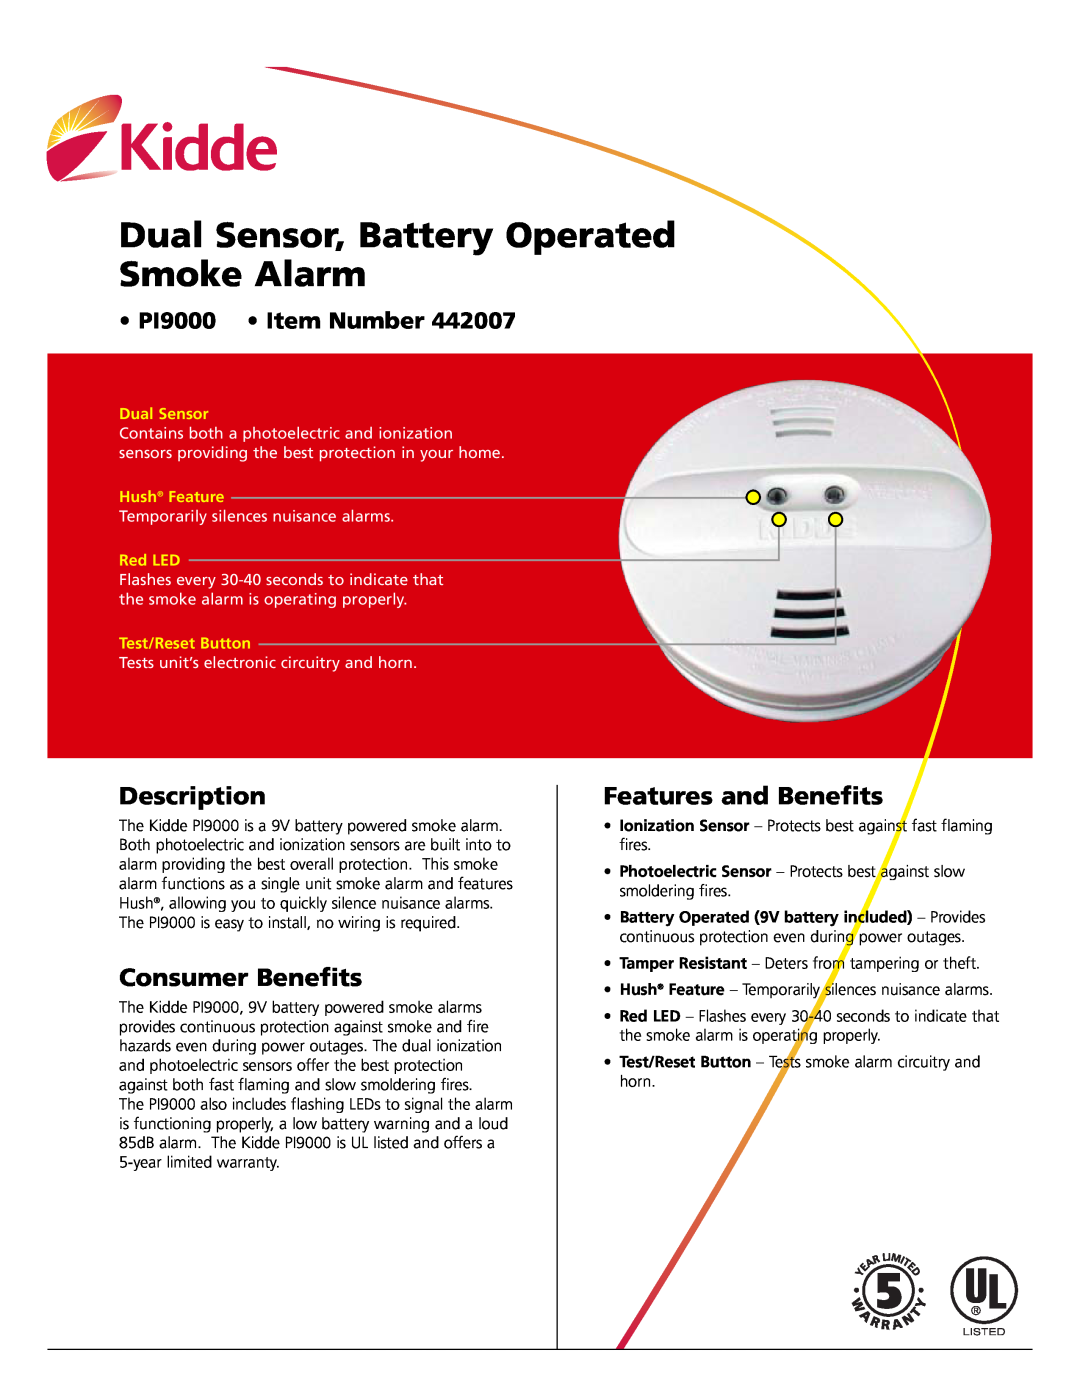 Kidde NC-7100W warranty Description, Consumer Benefits, Features and Benefits, Dual Sensor, Hush Feature, Red LED 